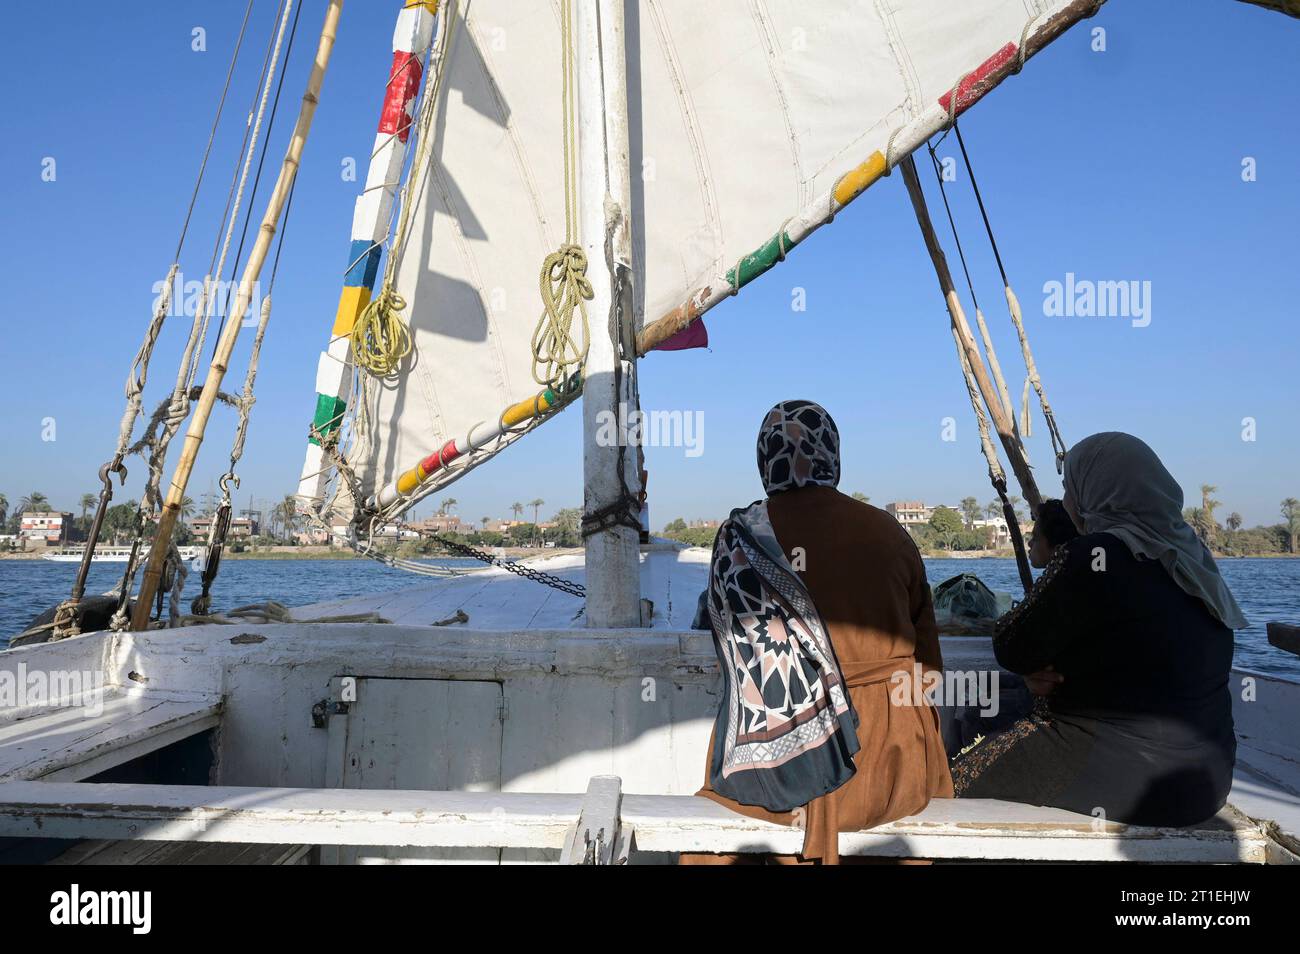 Egypt, Nile river EGYPT, Asyut, Nile river, Faluka sailing boat*** ÄGYPTEN, Assiut, Fluß Nil, Feluke Segelboot Asyut Egypt Credit: Imago/Alamy Live News Stock Photo